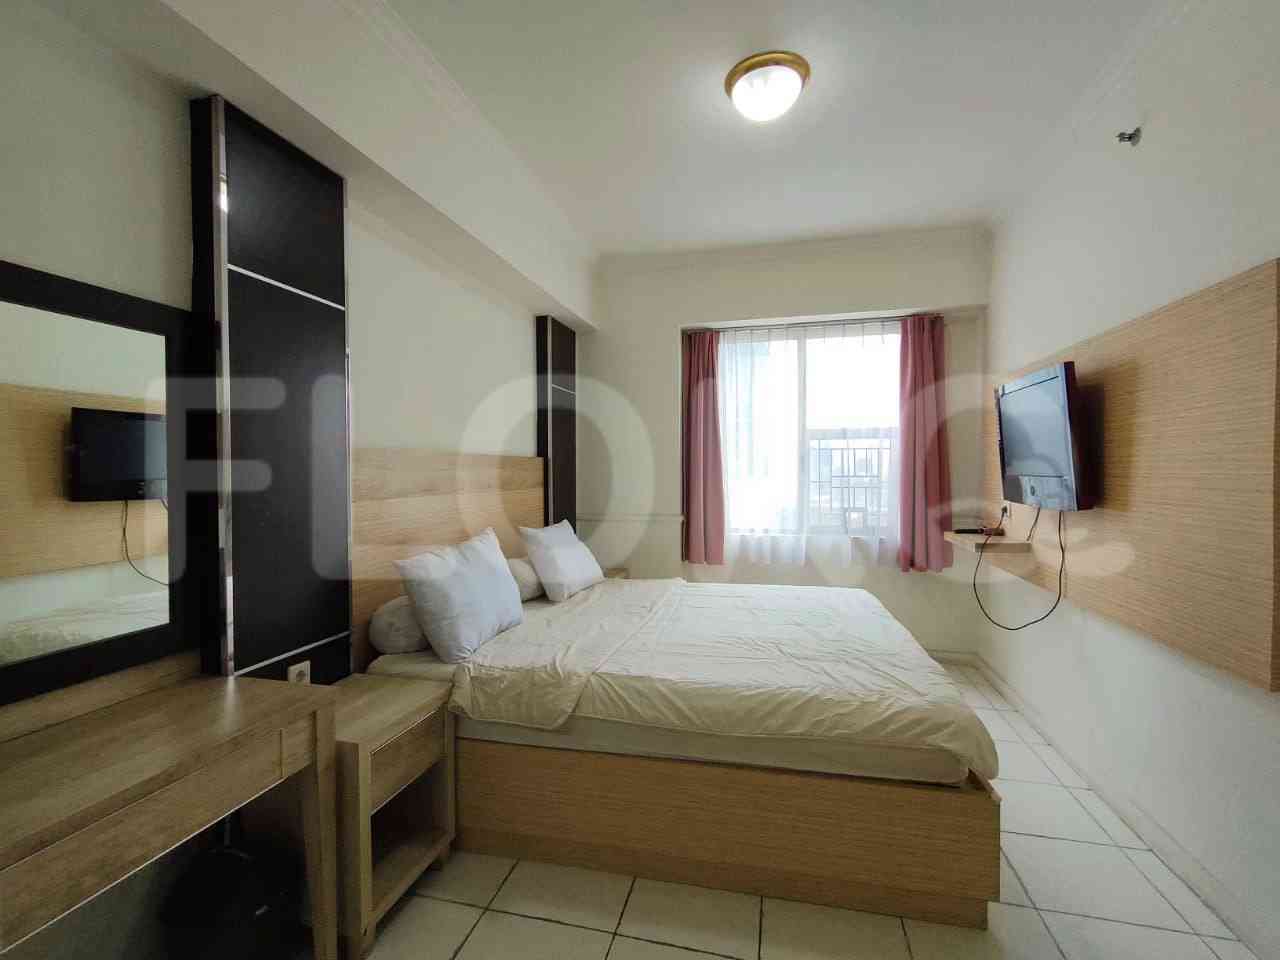 2 Bedroom on 17th Floor for Rent in Aryaduta Suites Semanggi - fsuee1 1